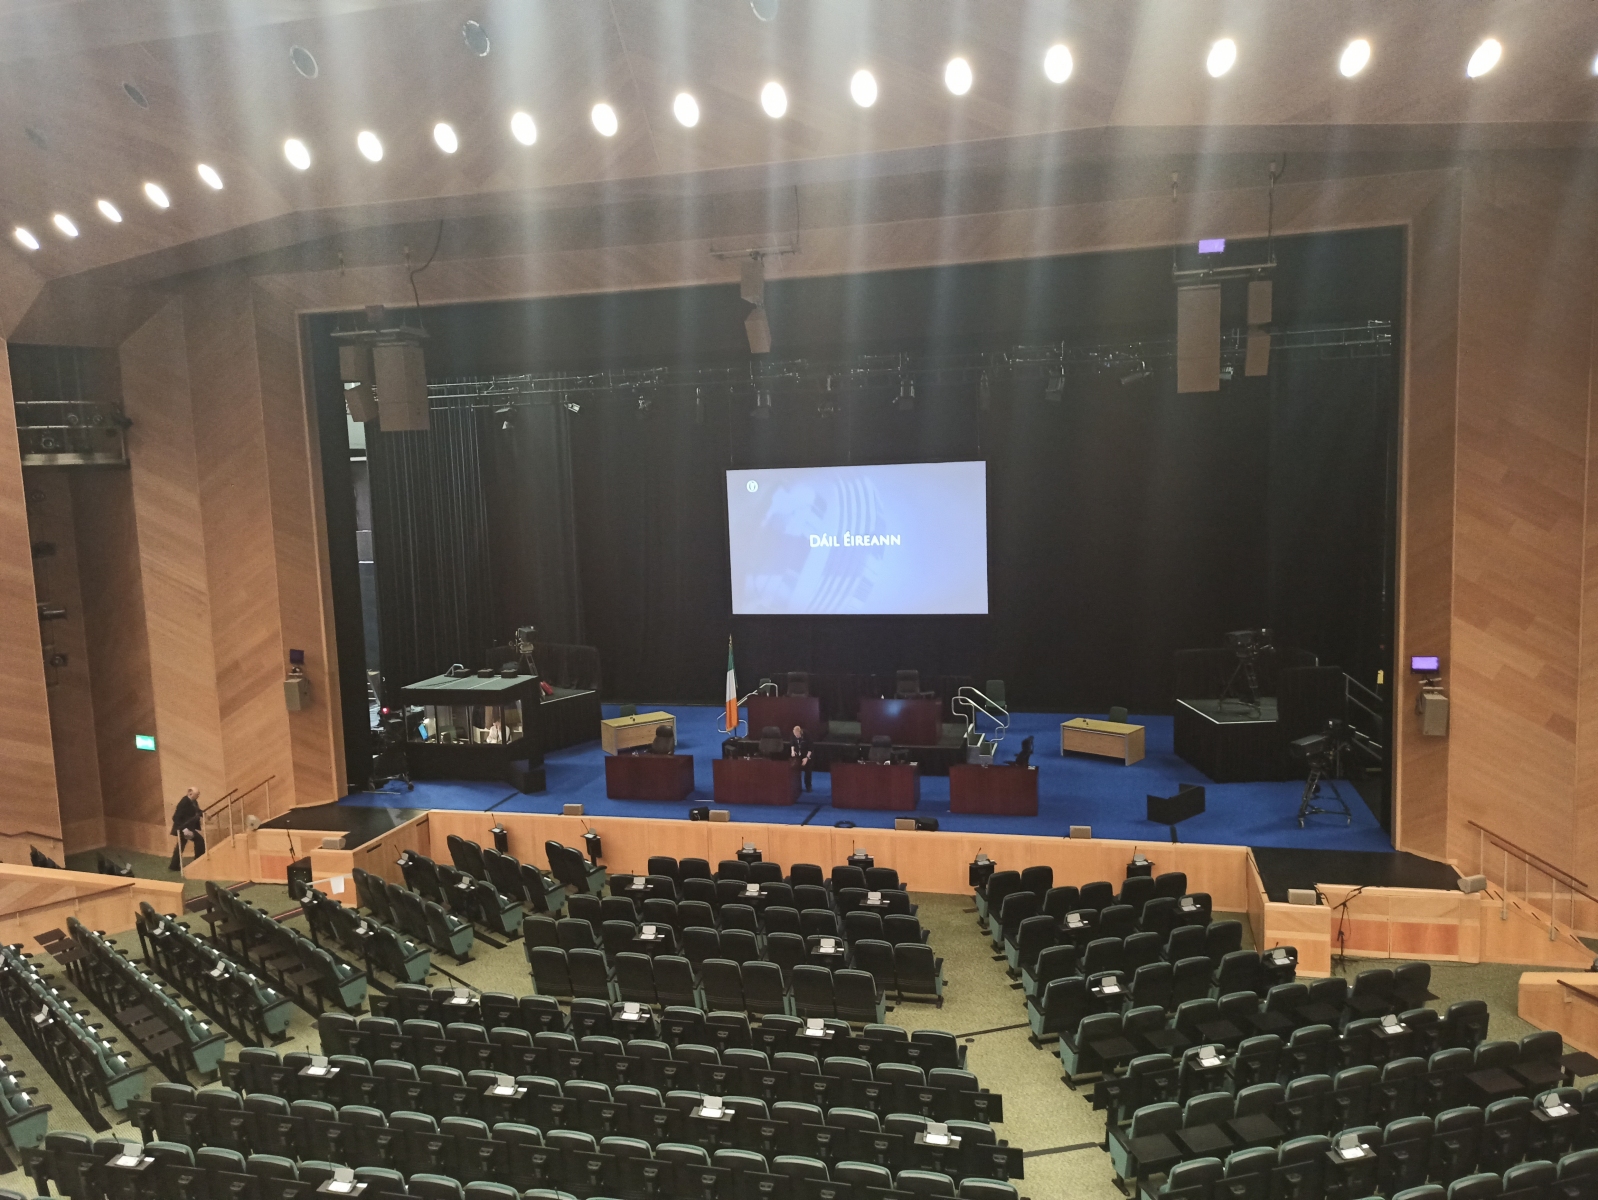 Convention Centre Auditorium - Stage View